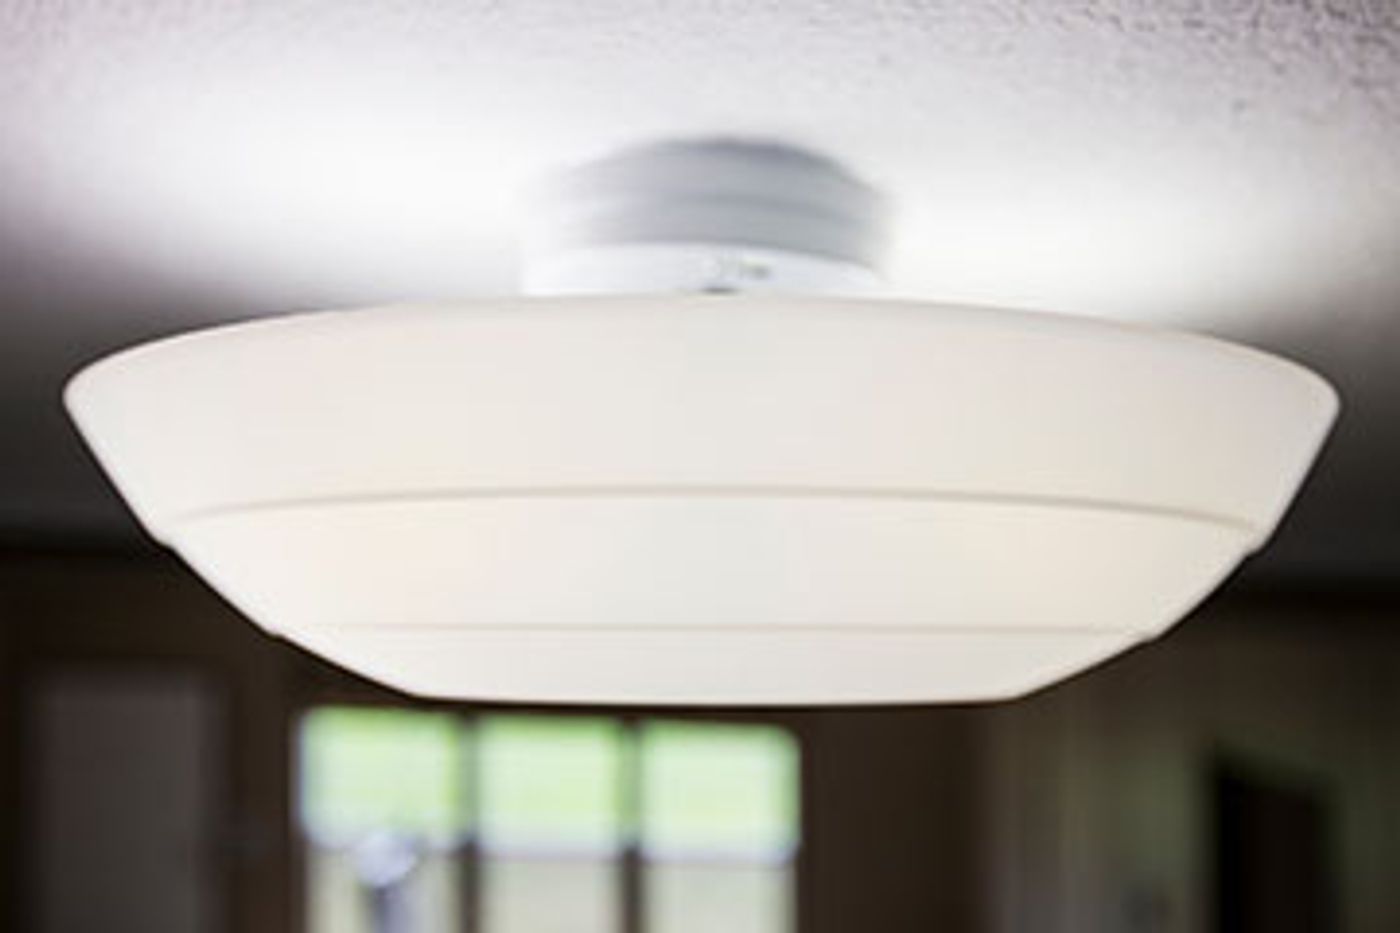 energy efficient lighting